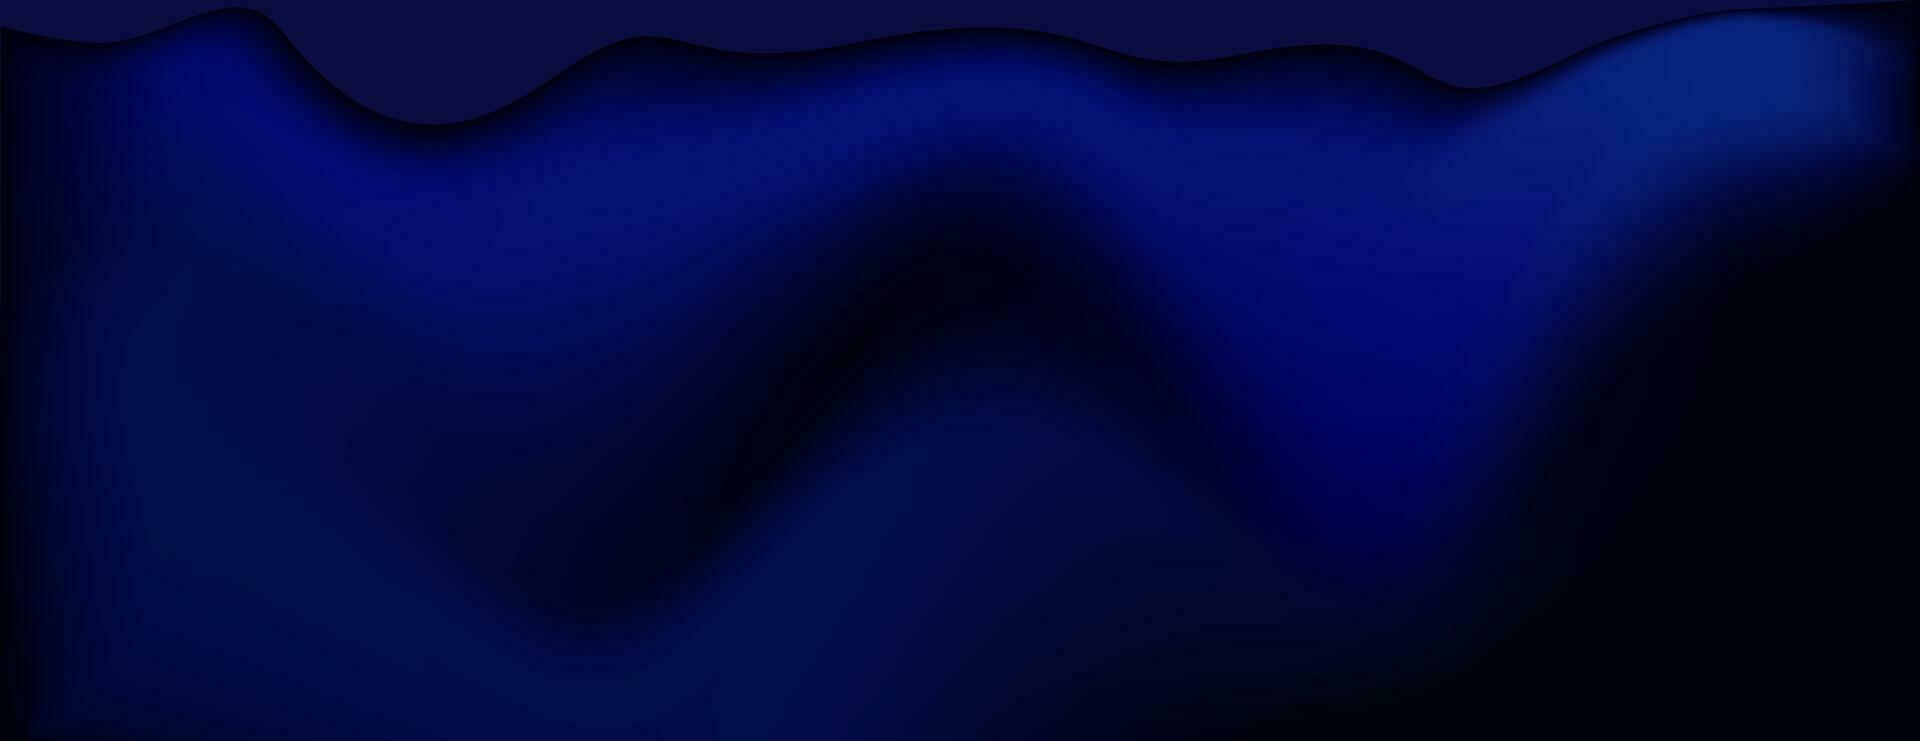 Vector abstract transition color dark blue  background.  Wave smooth back . Modern  halftone gradient fon. Suit for poster, cover, banner, brochure, website, sale, border, back